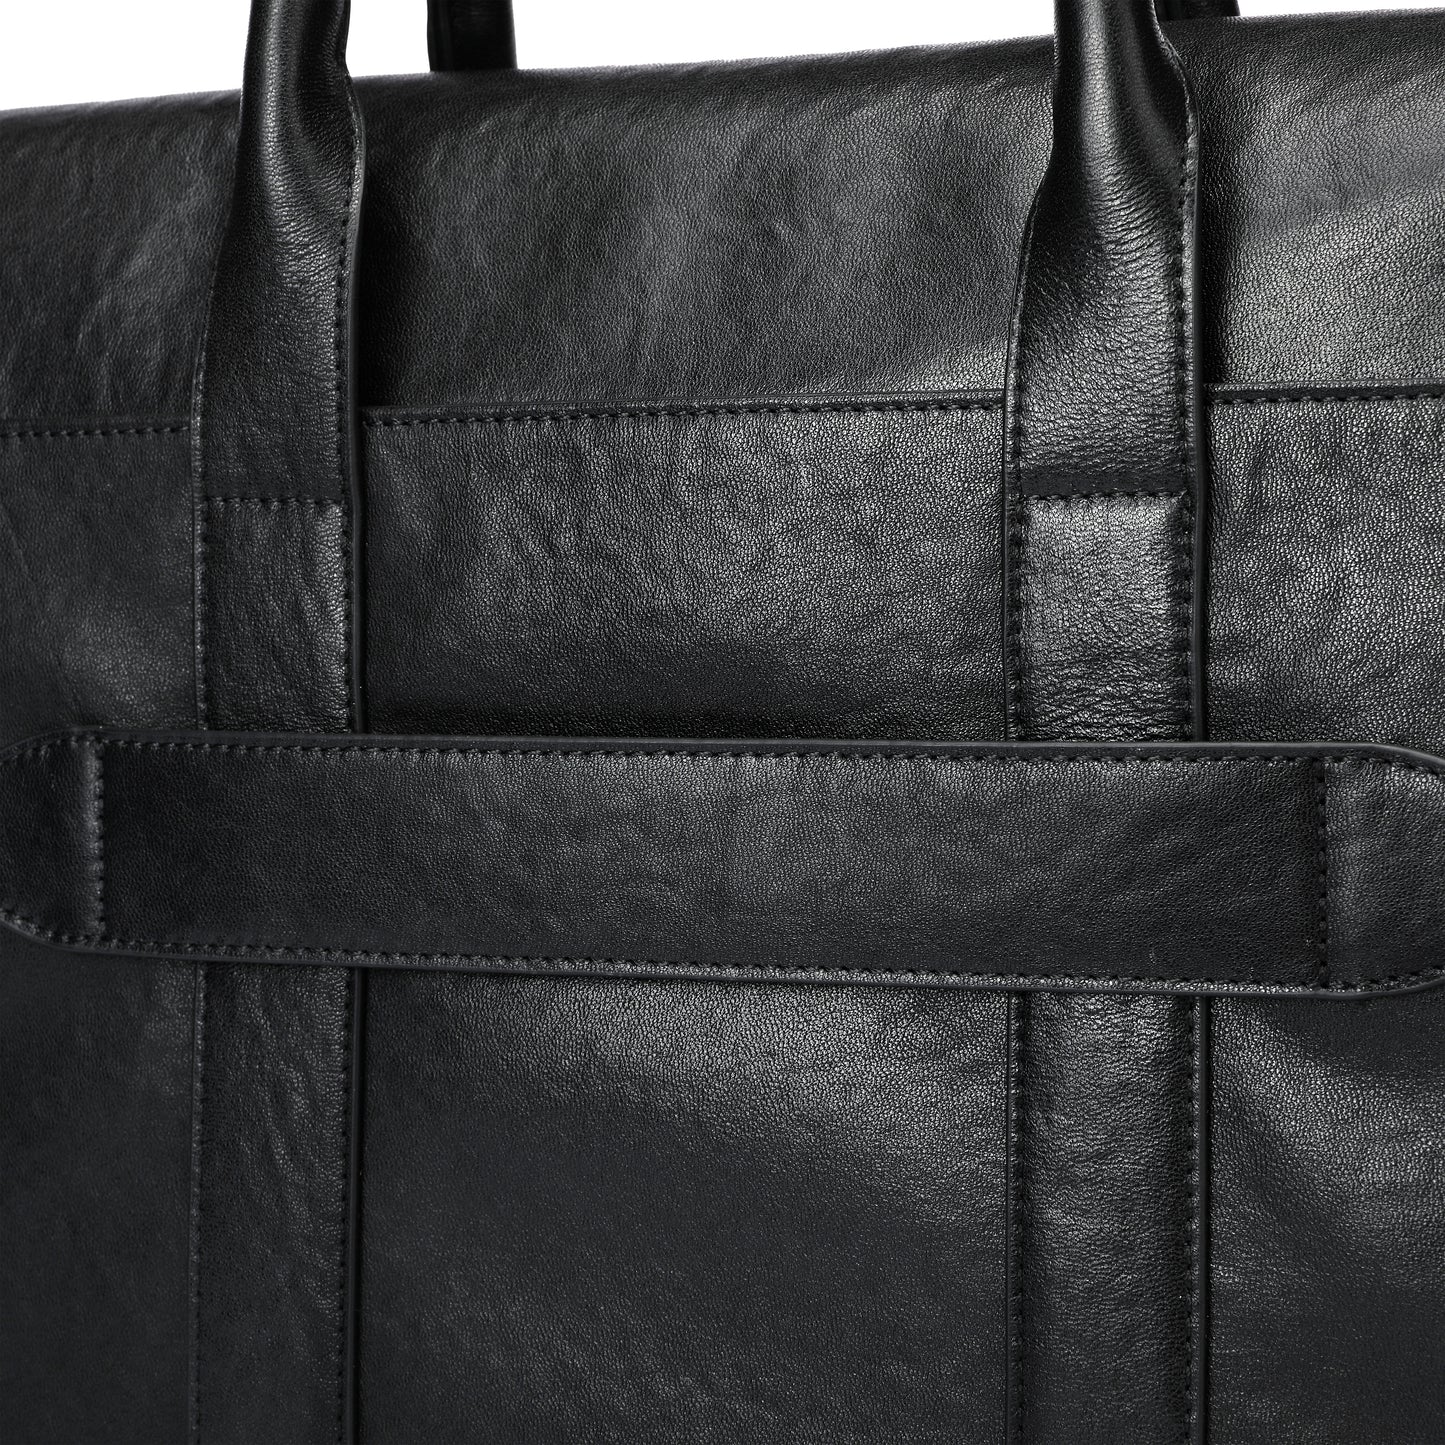 Unisex genuine cowhide leather travel briefcase Flap design